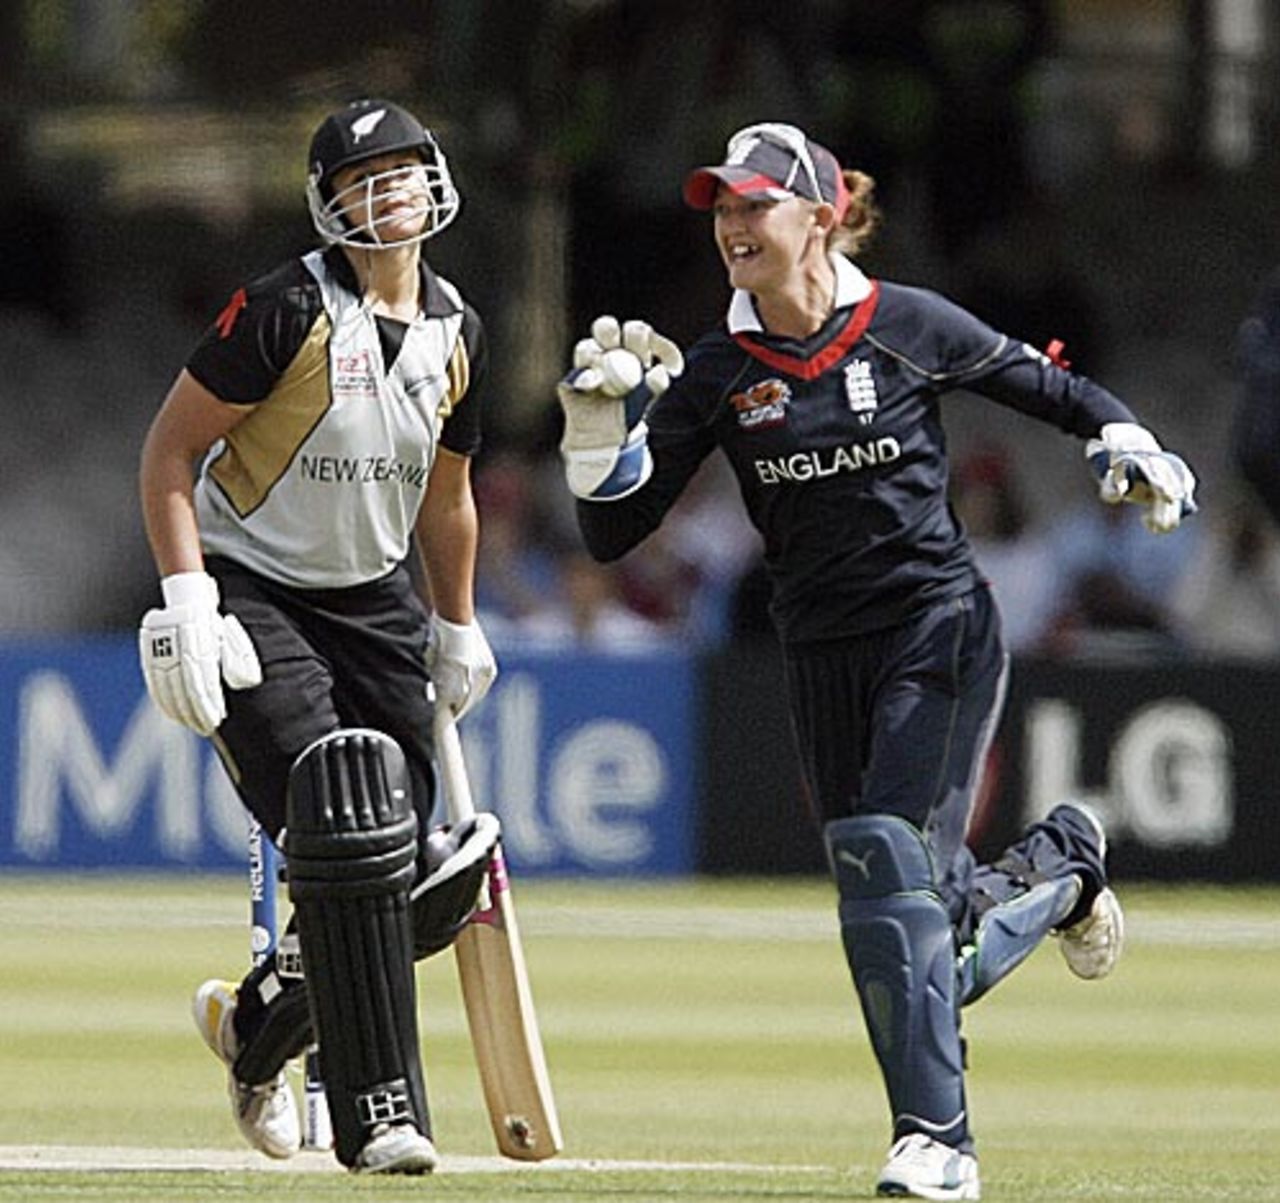 Suzie Bates is stumped by Sarah Taylor, England v New Zealand, ICC Women's World Twenty20 final, Lord's, June 21, 2009